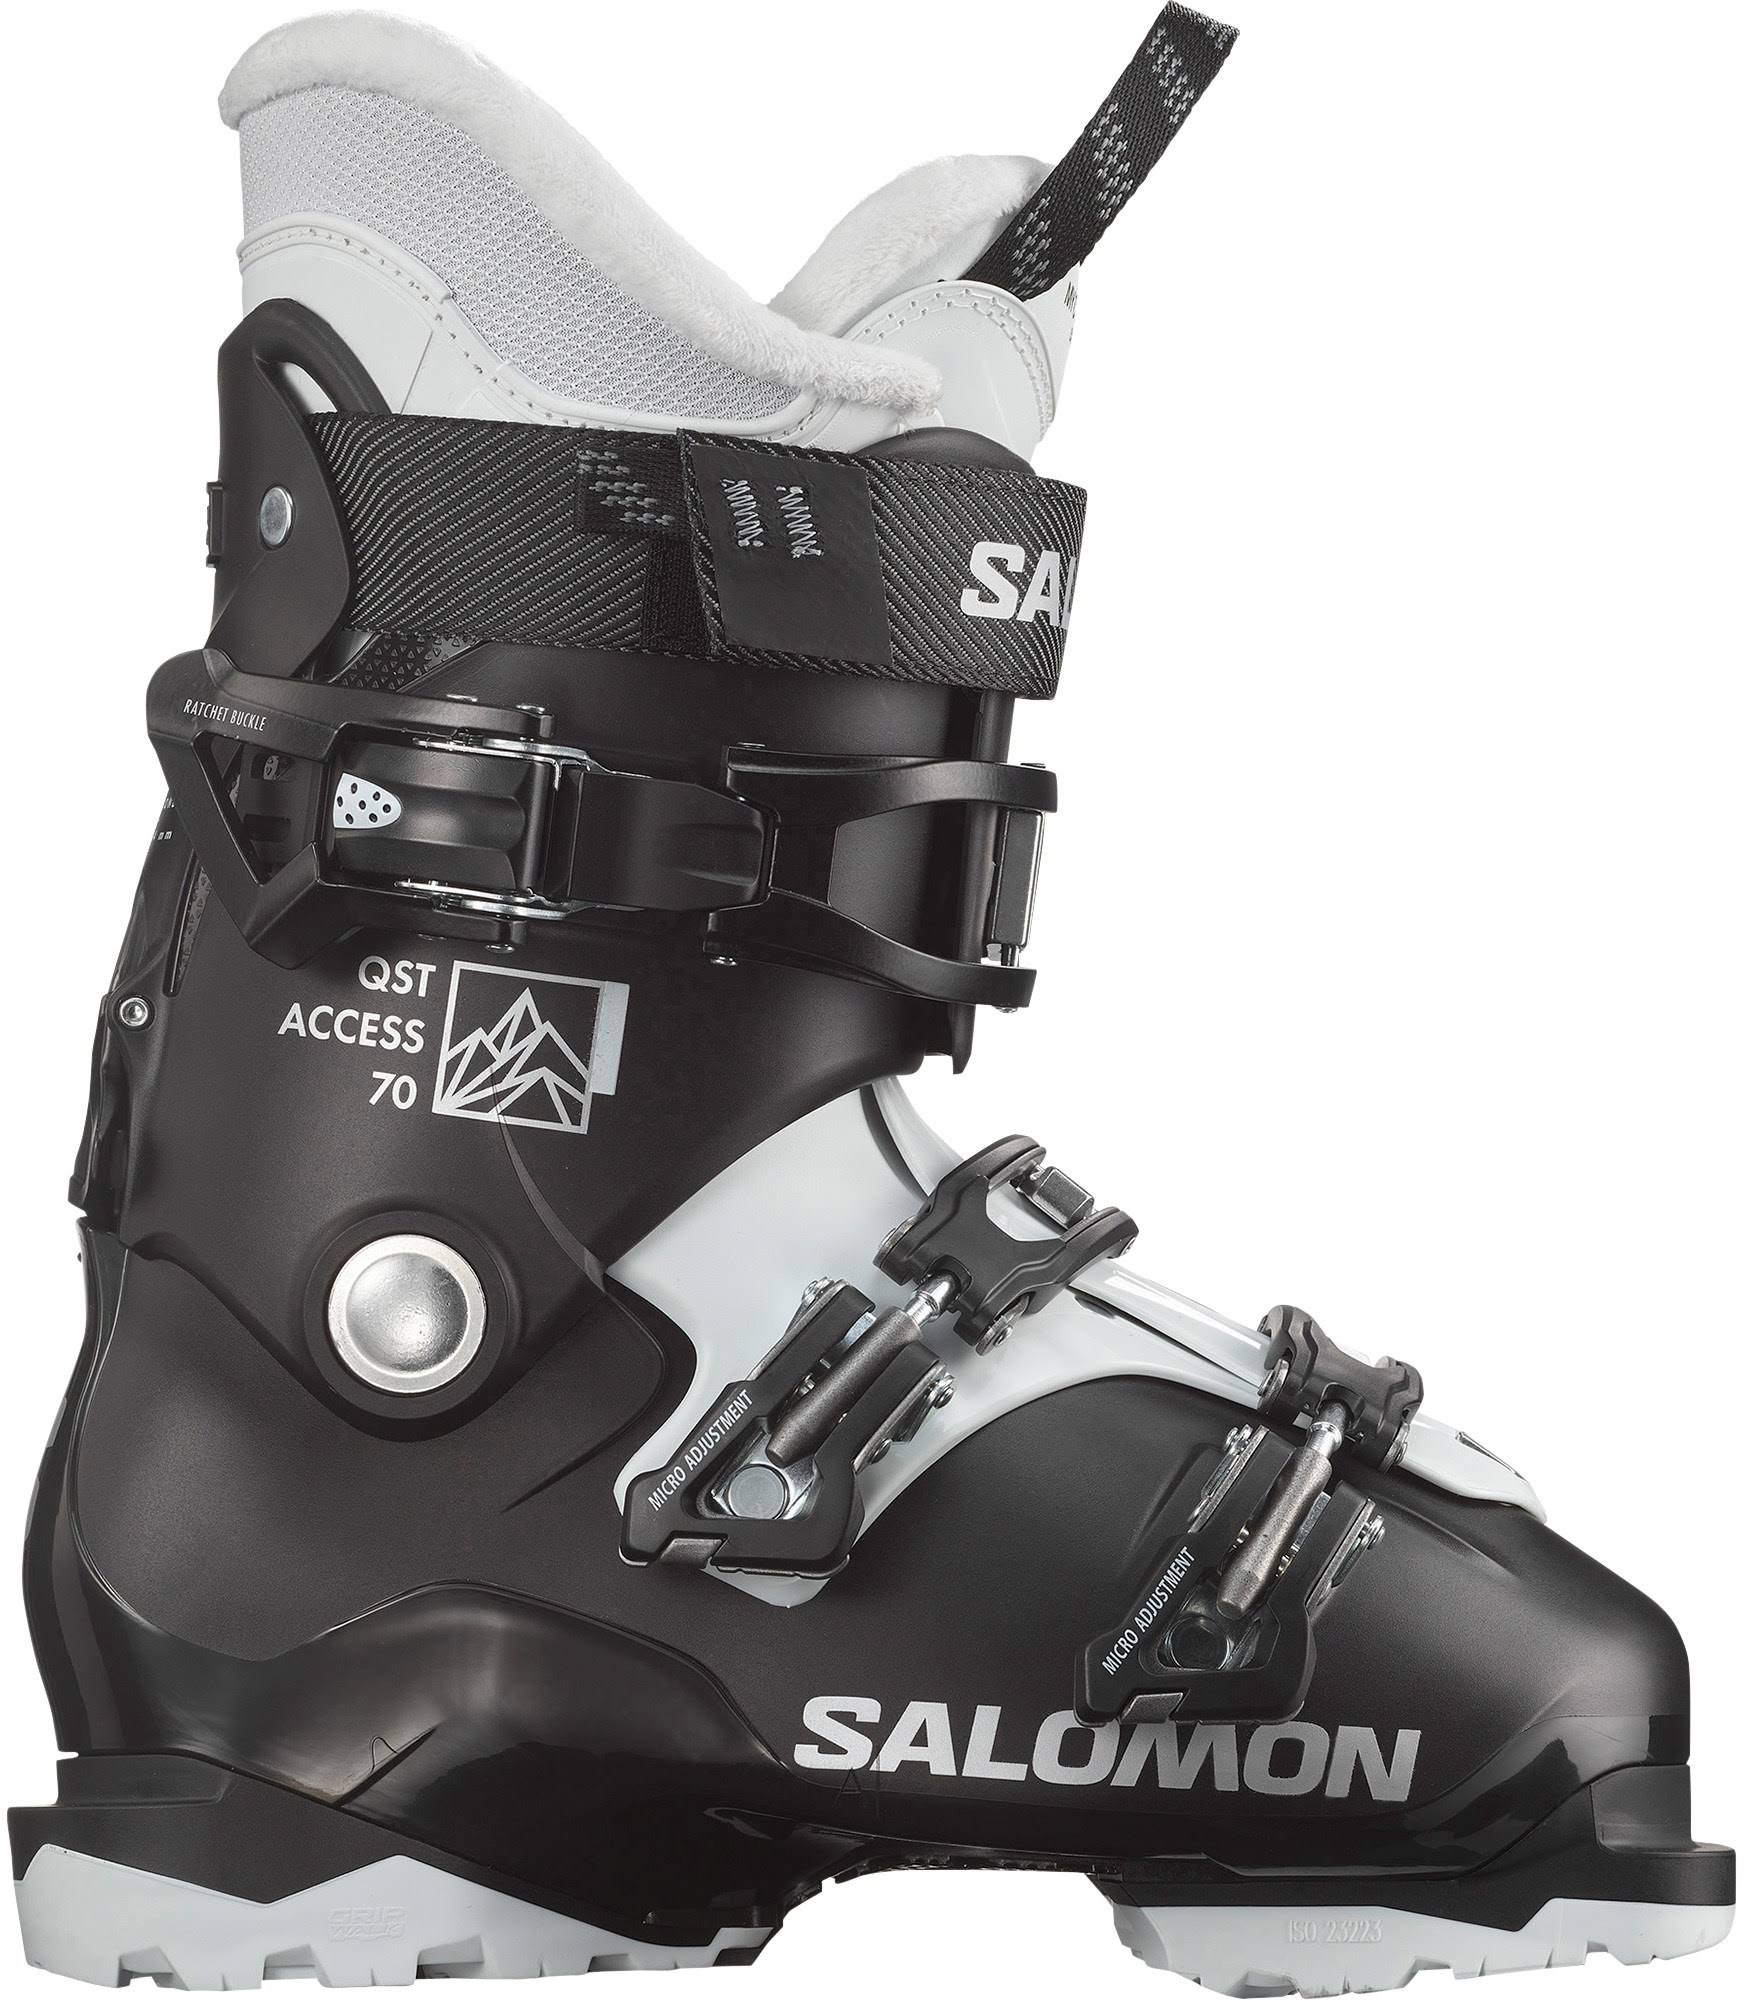 Salomon Qst Access 70 W Gw Alpine Ski Boots Black 24.0-24.5